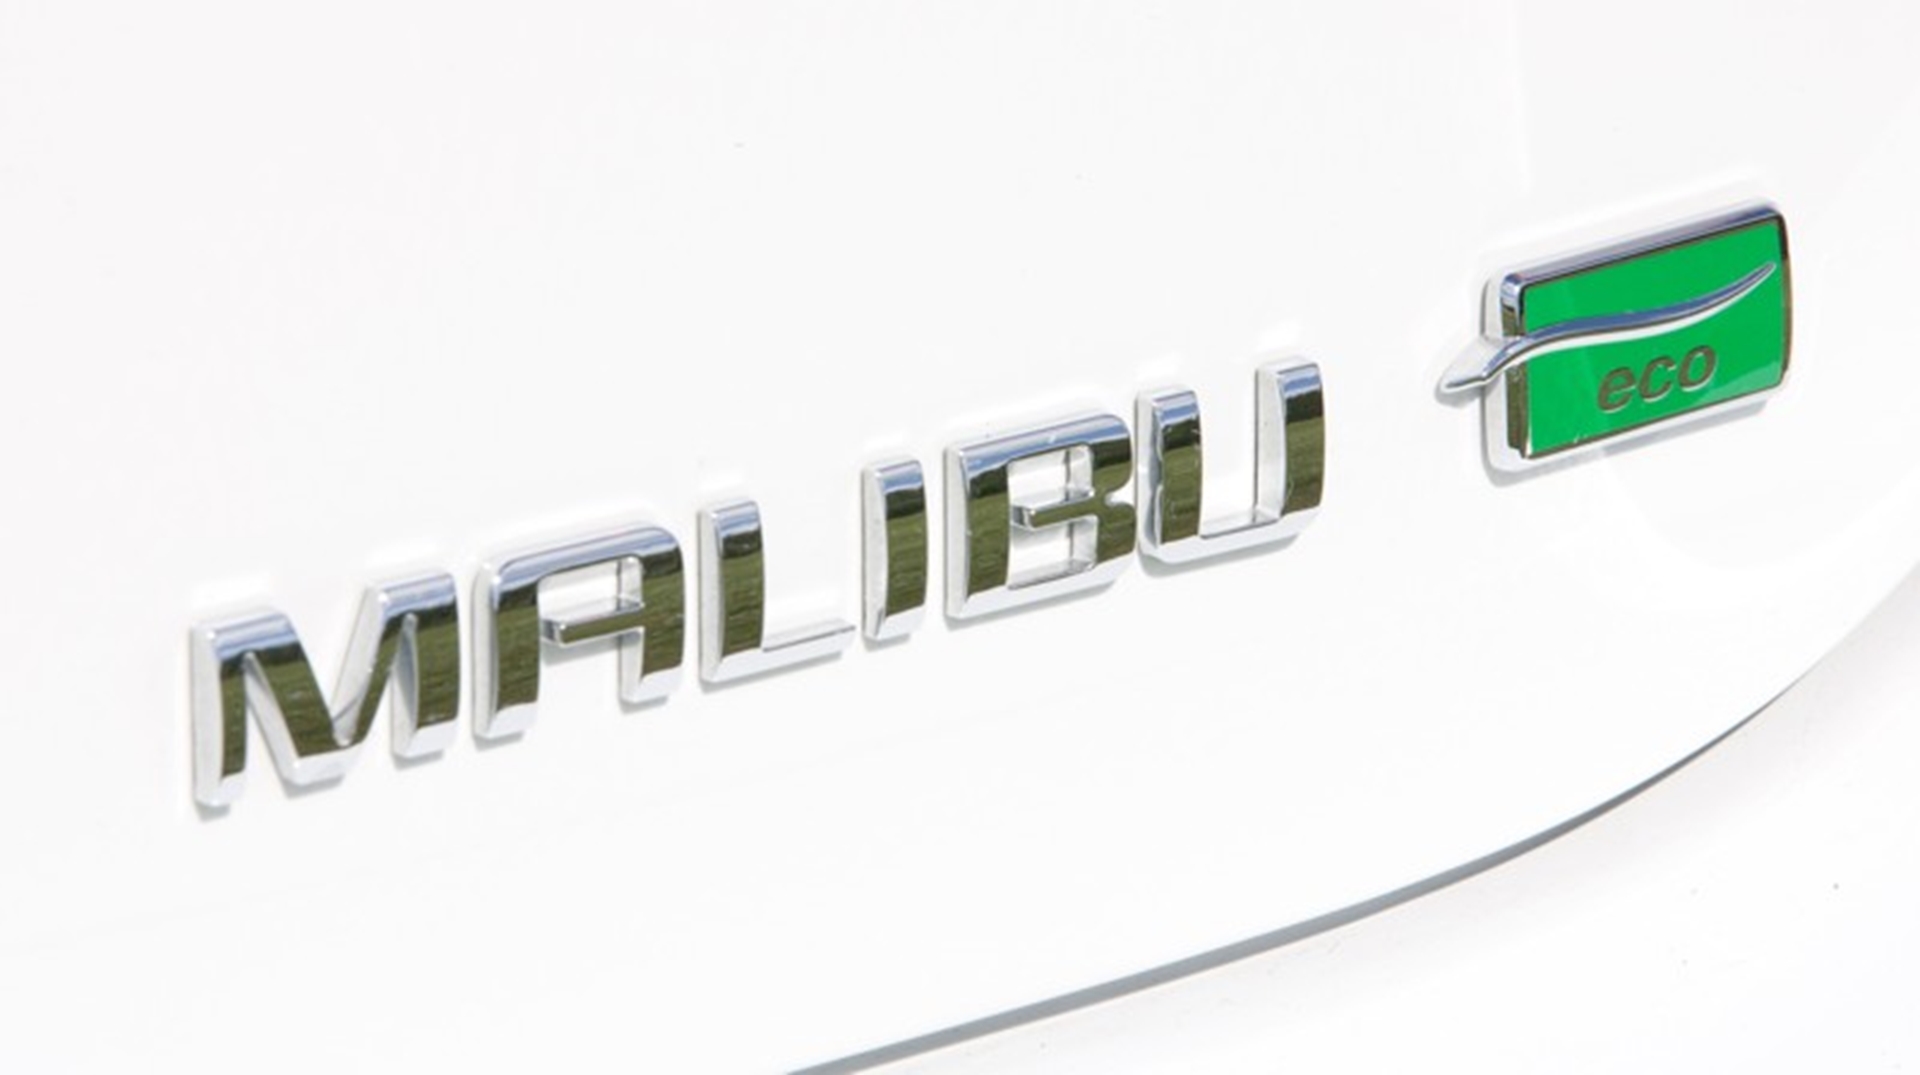 Chevrolet Malibu is Longest-Running Midsize Nameplate